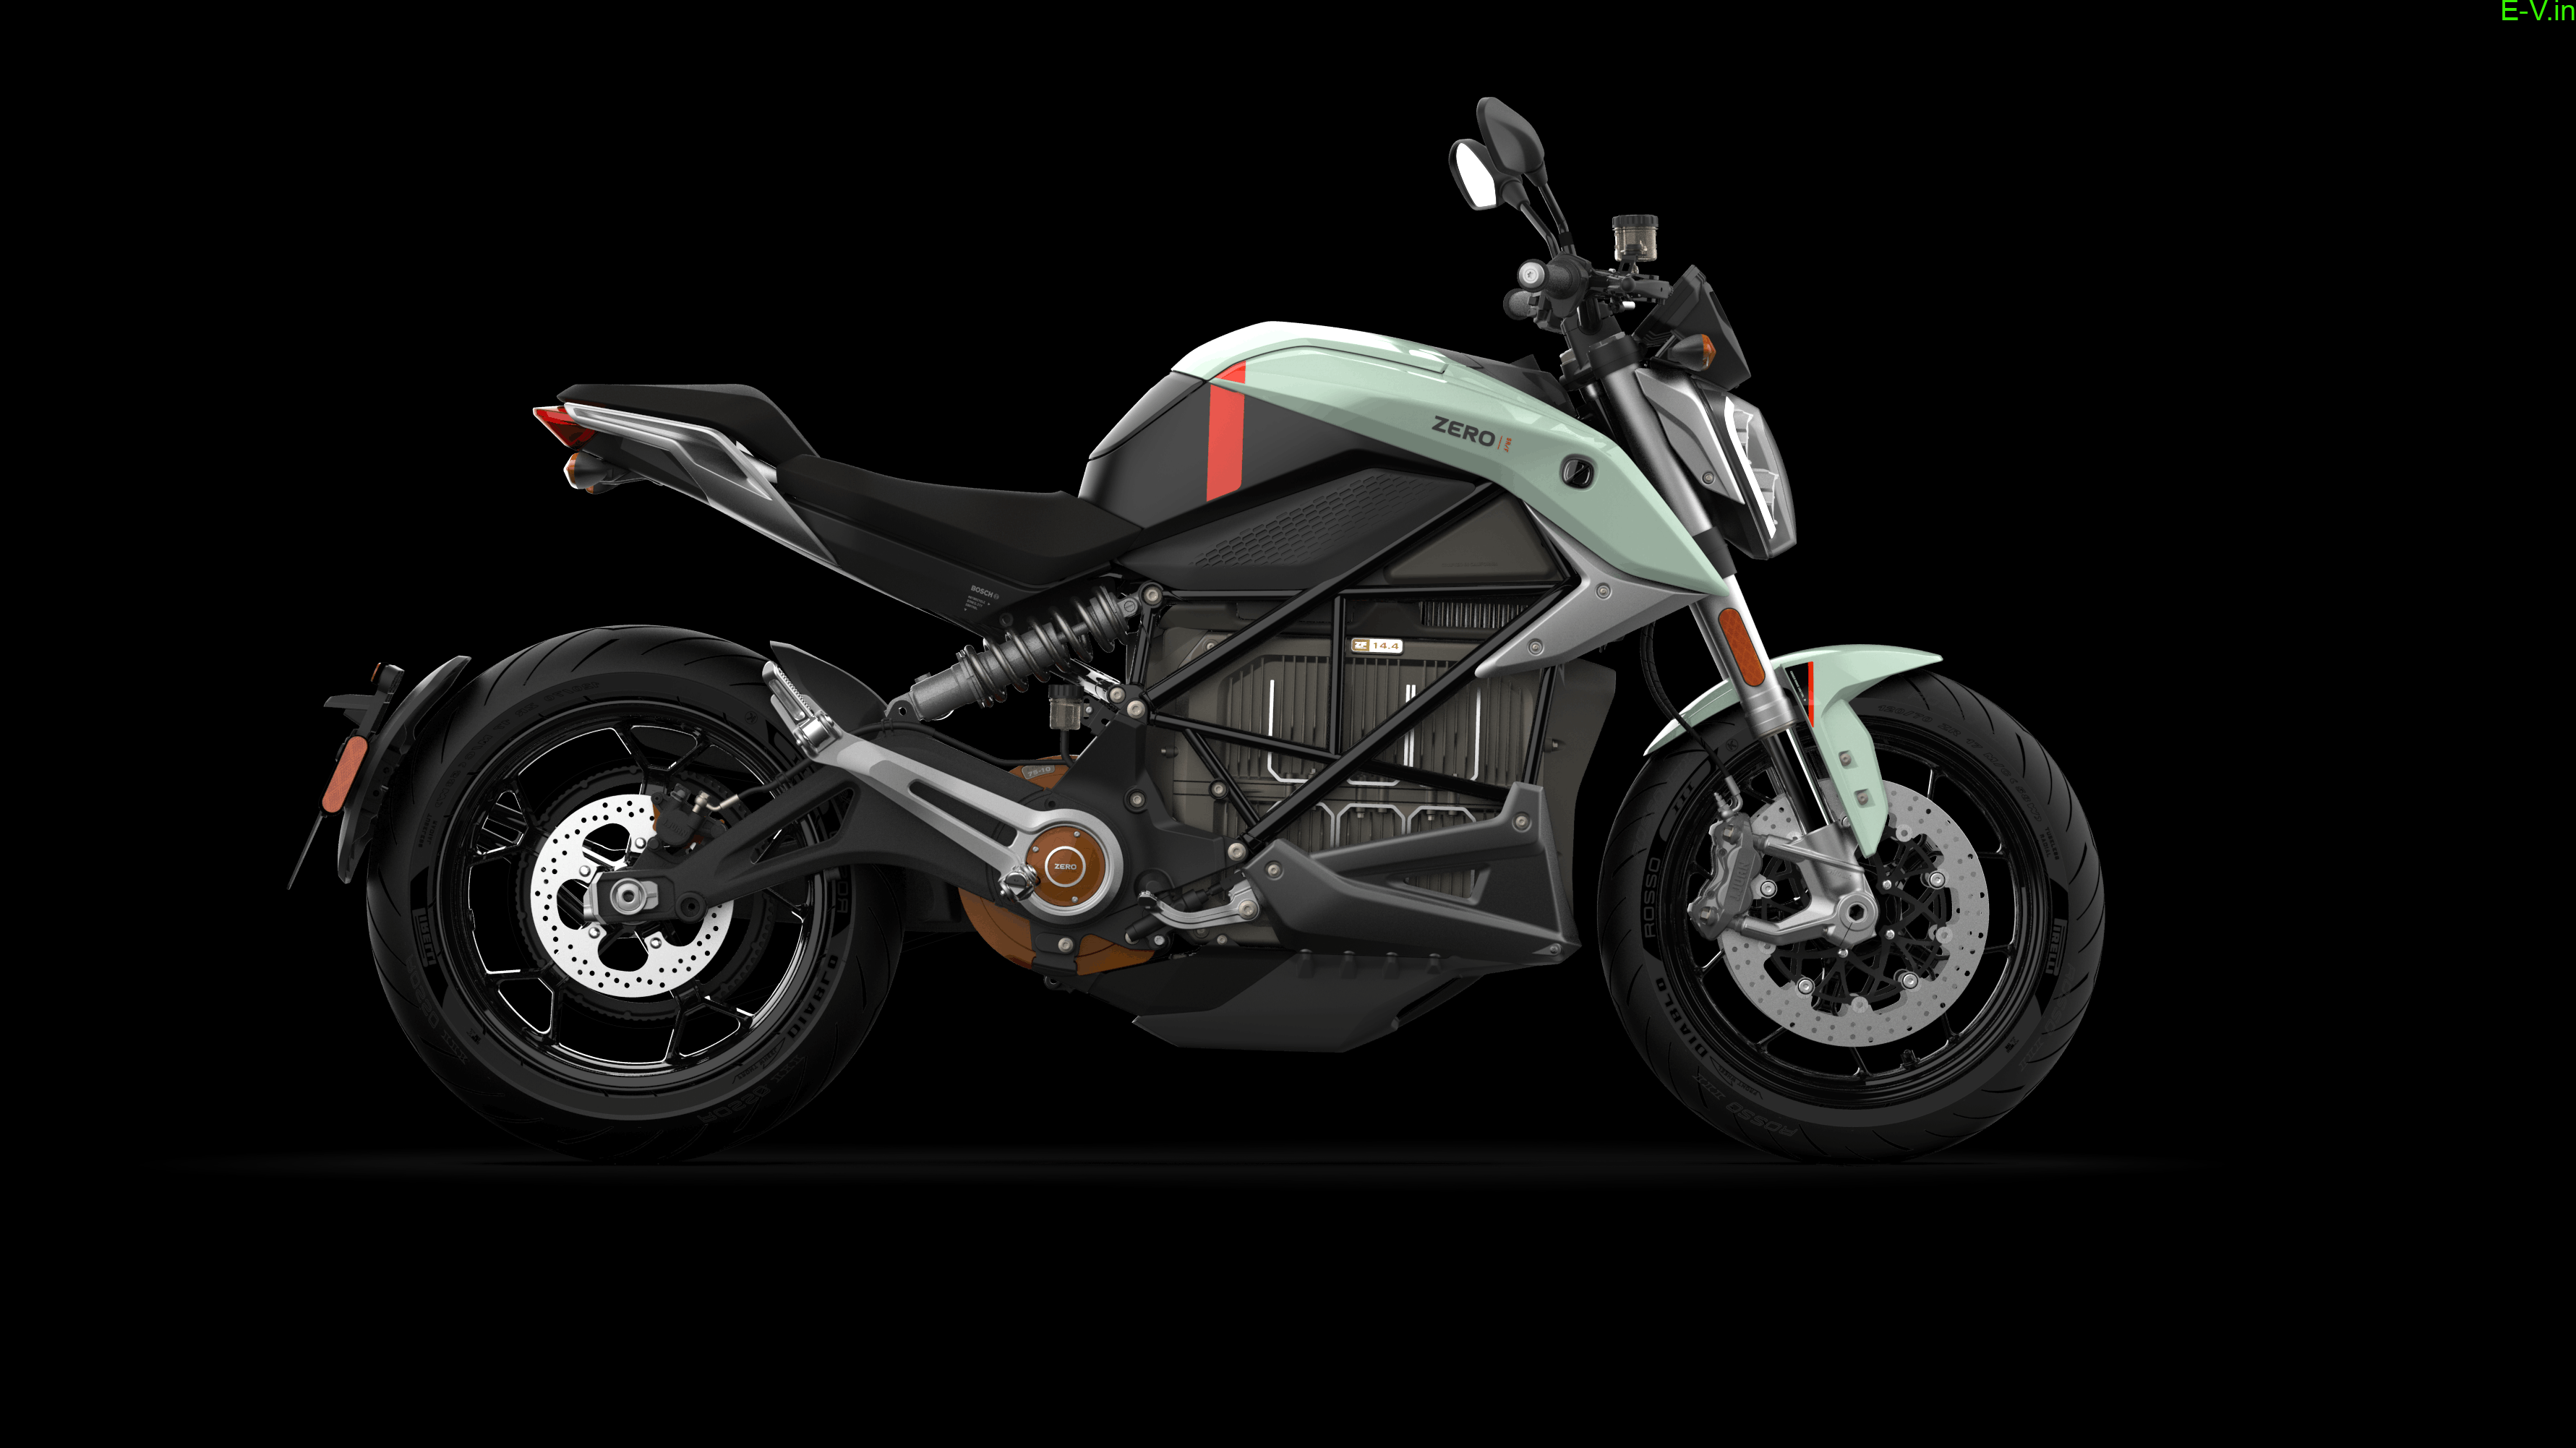 Zero SR/F electric motorcycle - Promoting Eco Friendly Travel